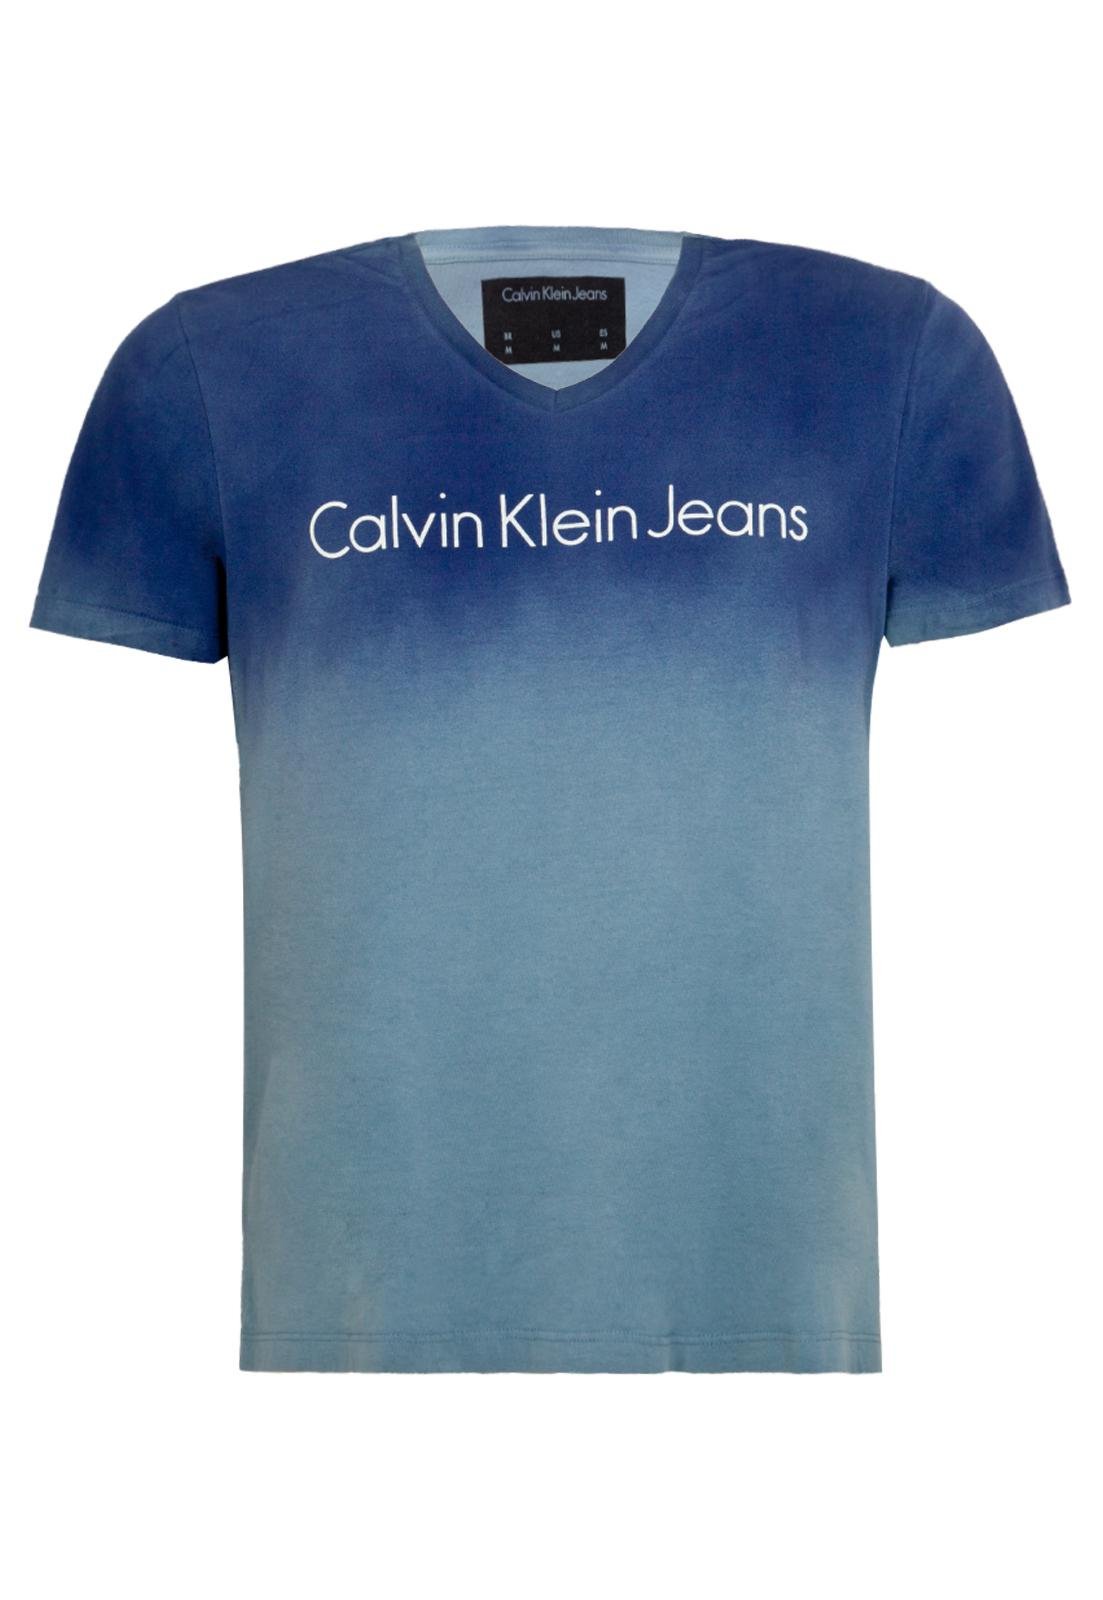 camiseta calvin klein jeans masculina